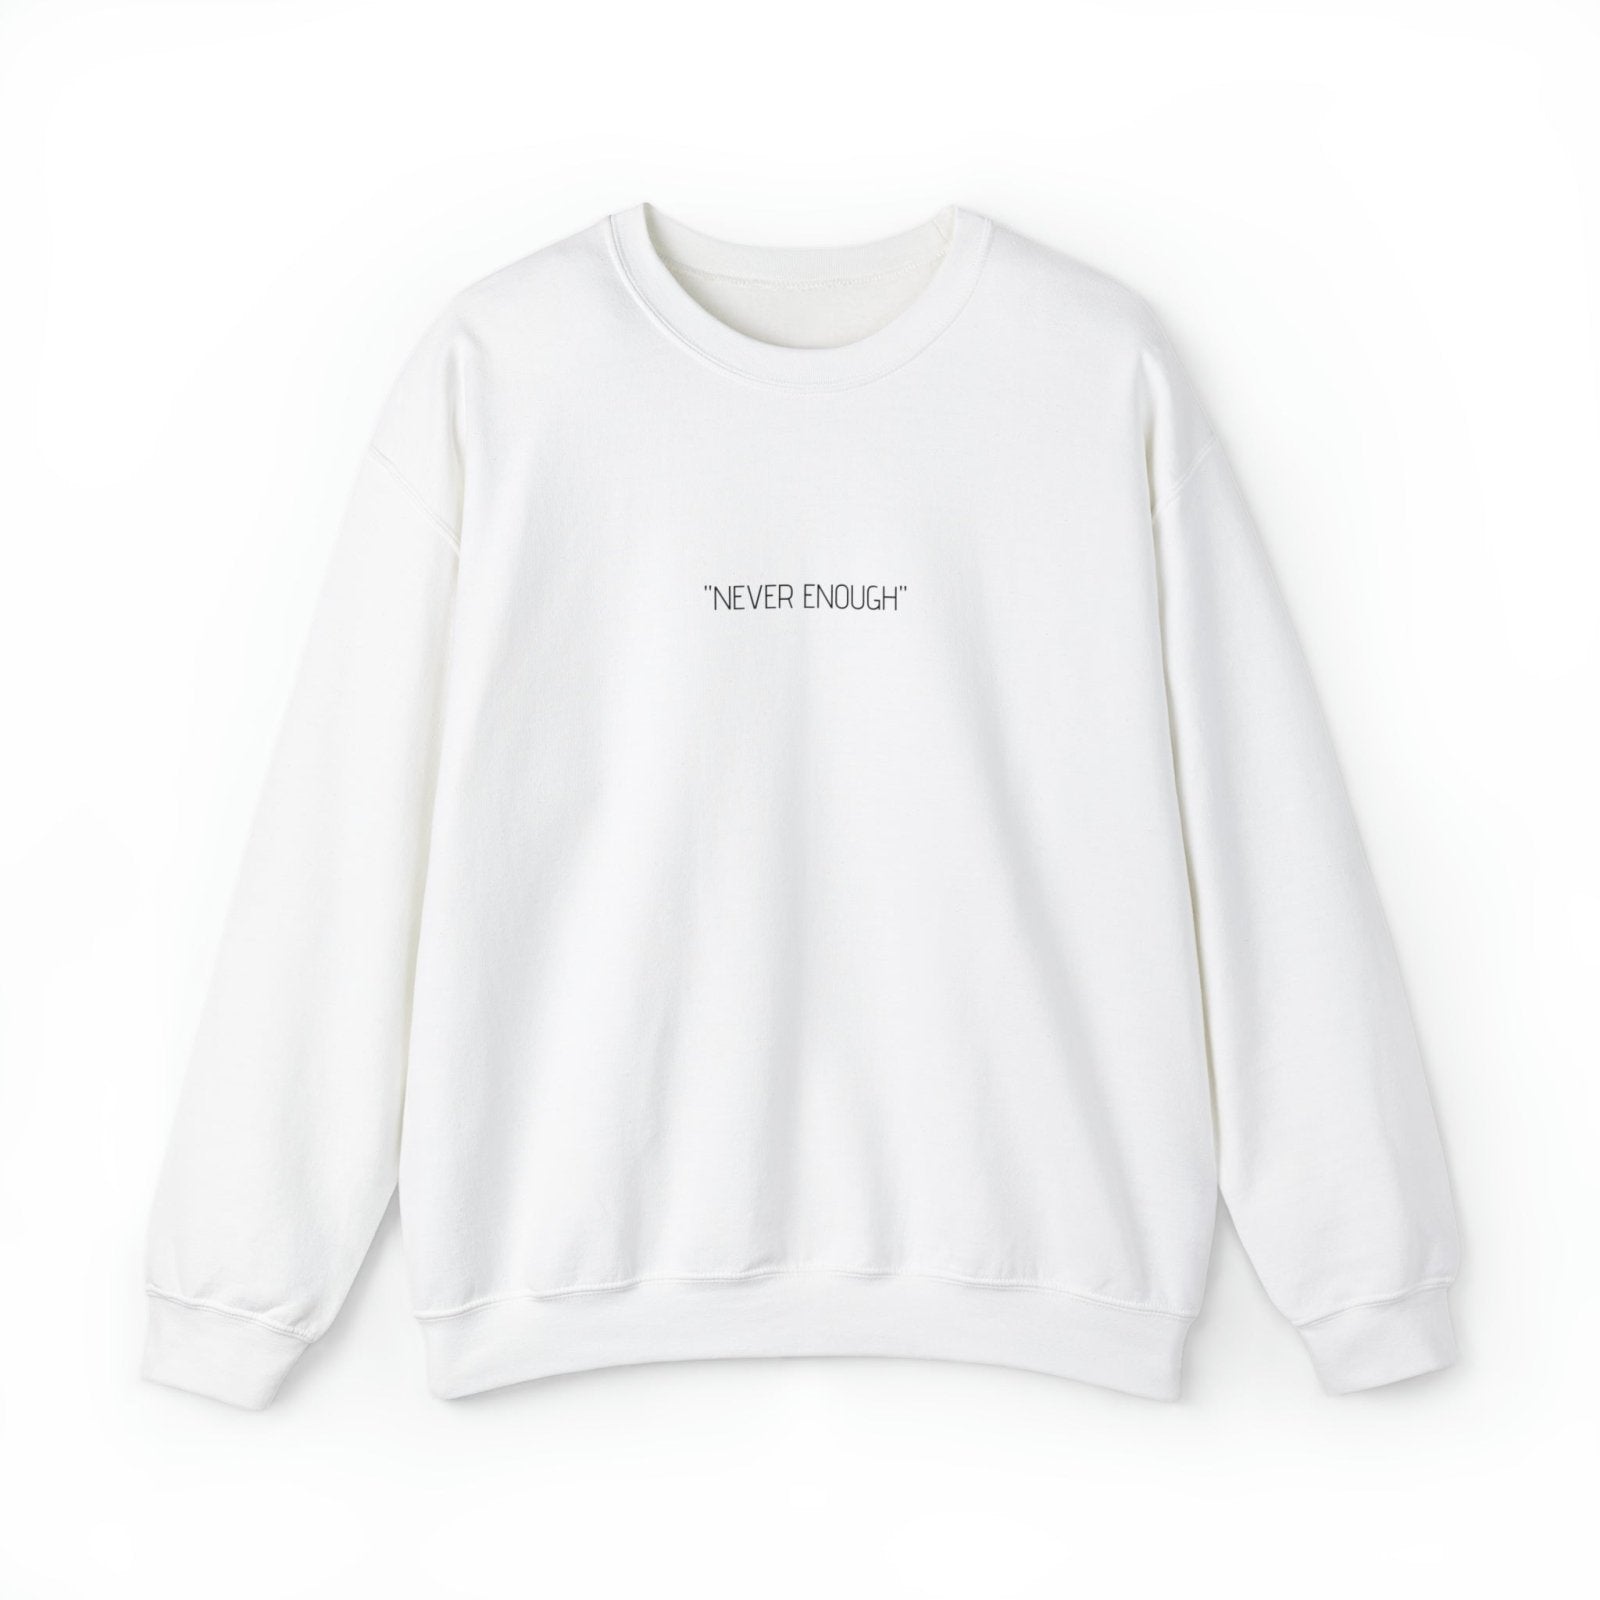 "NEVER ENOUGH" cotton sweatshirt - Dowding